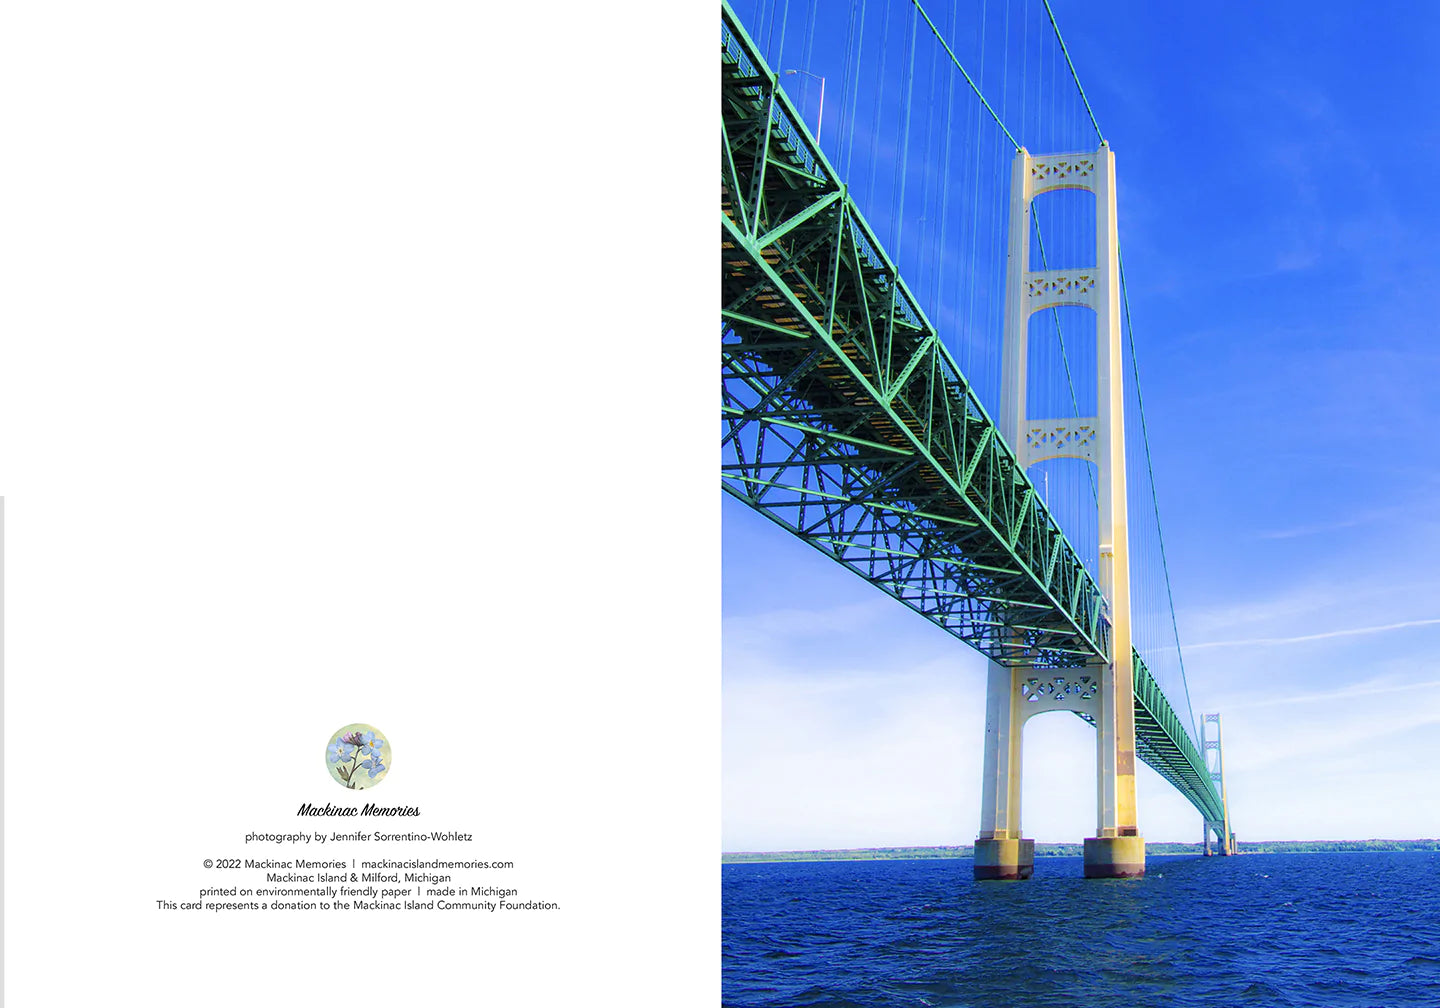 Blank greeting card featuring a photograph of the Mackinac Bridge by Michigan artist Jennifer Wohletz of Mackinac Memories.  